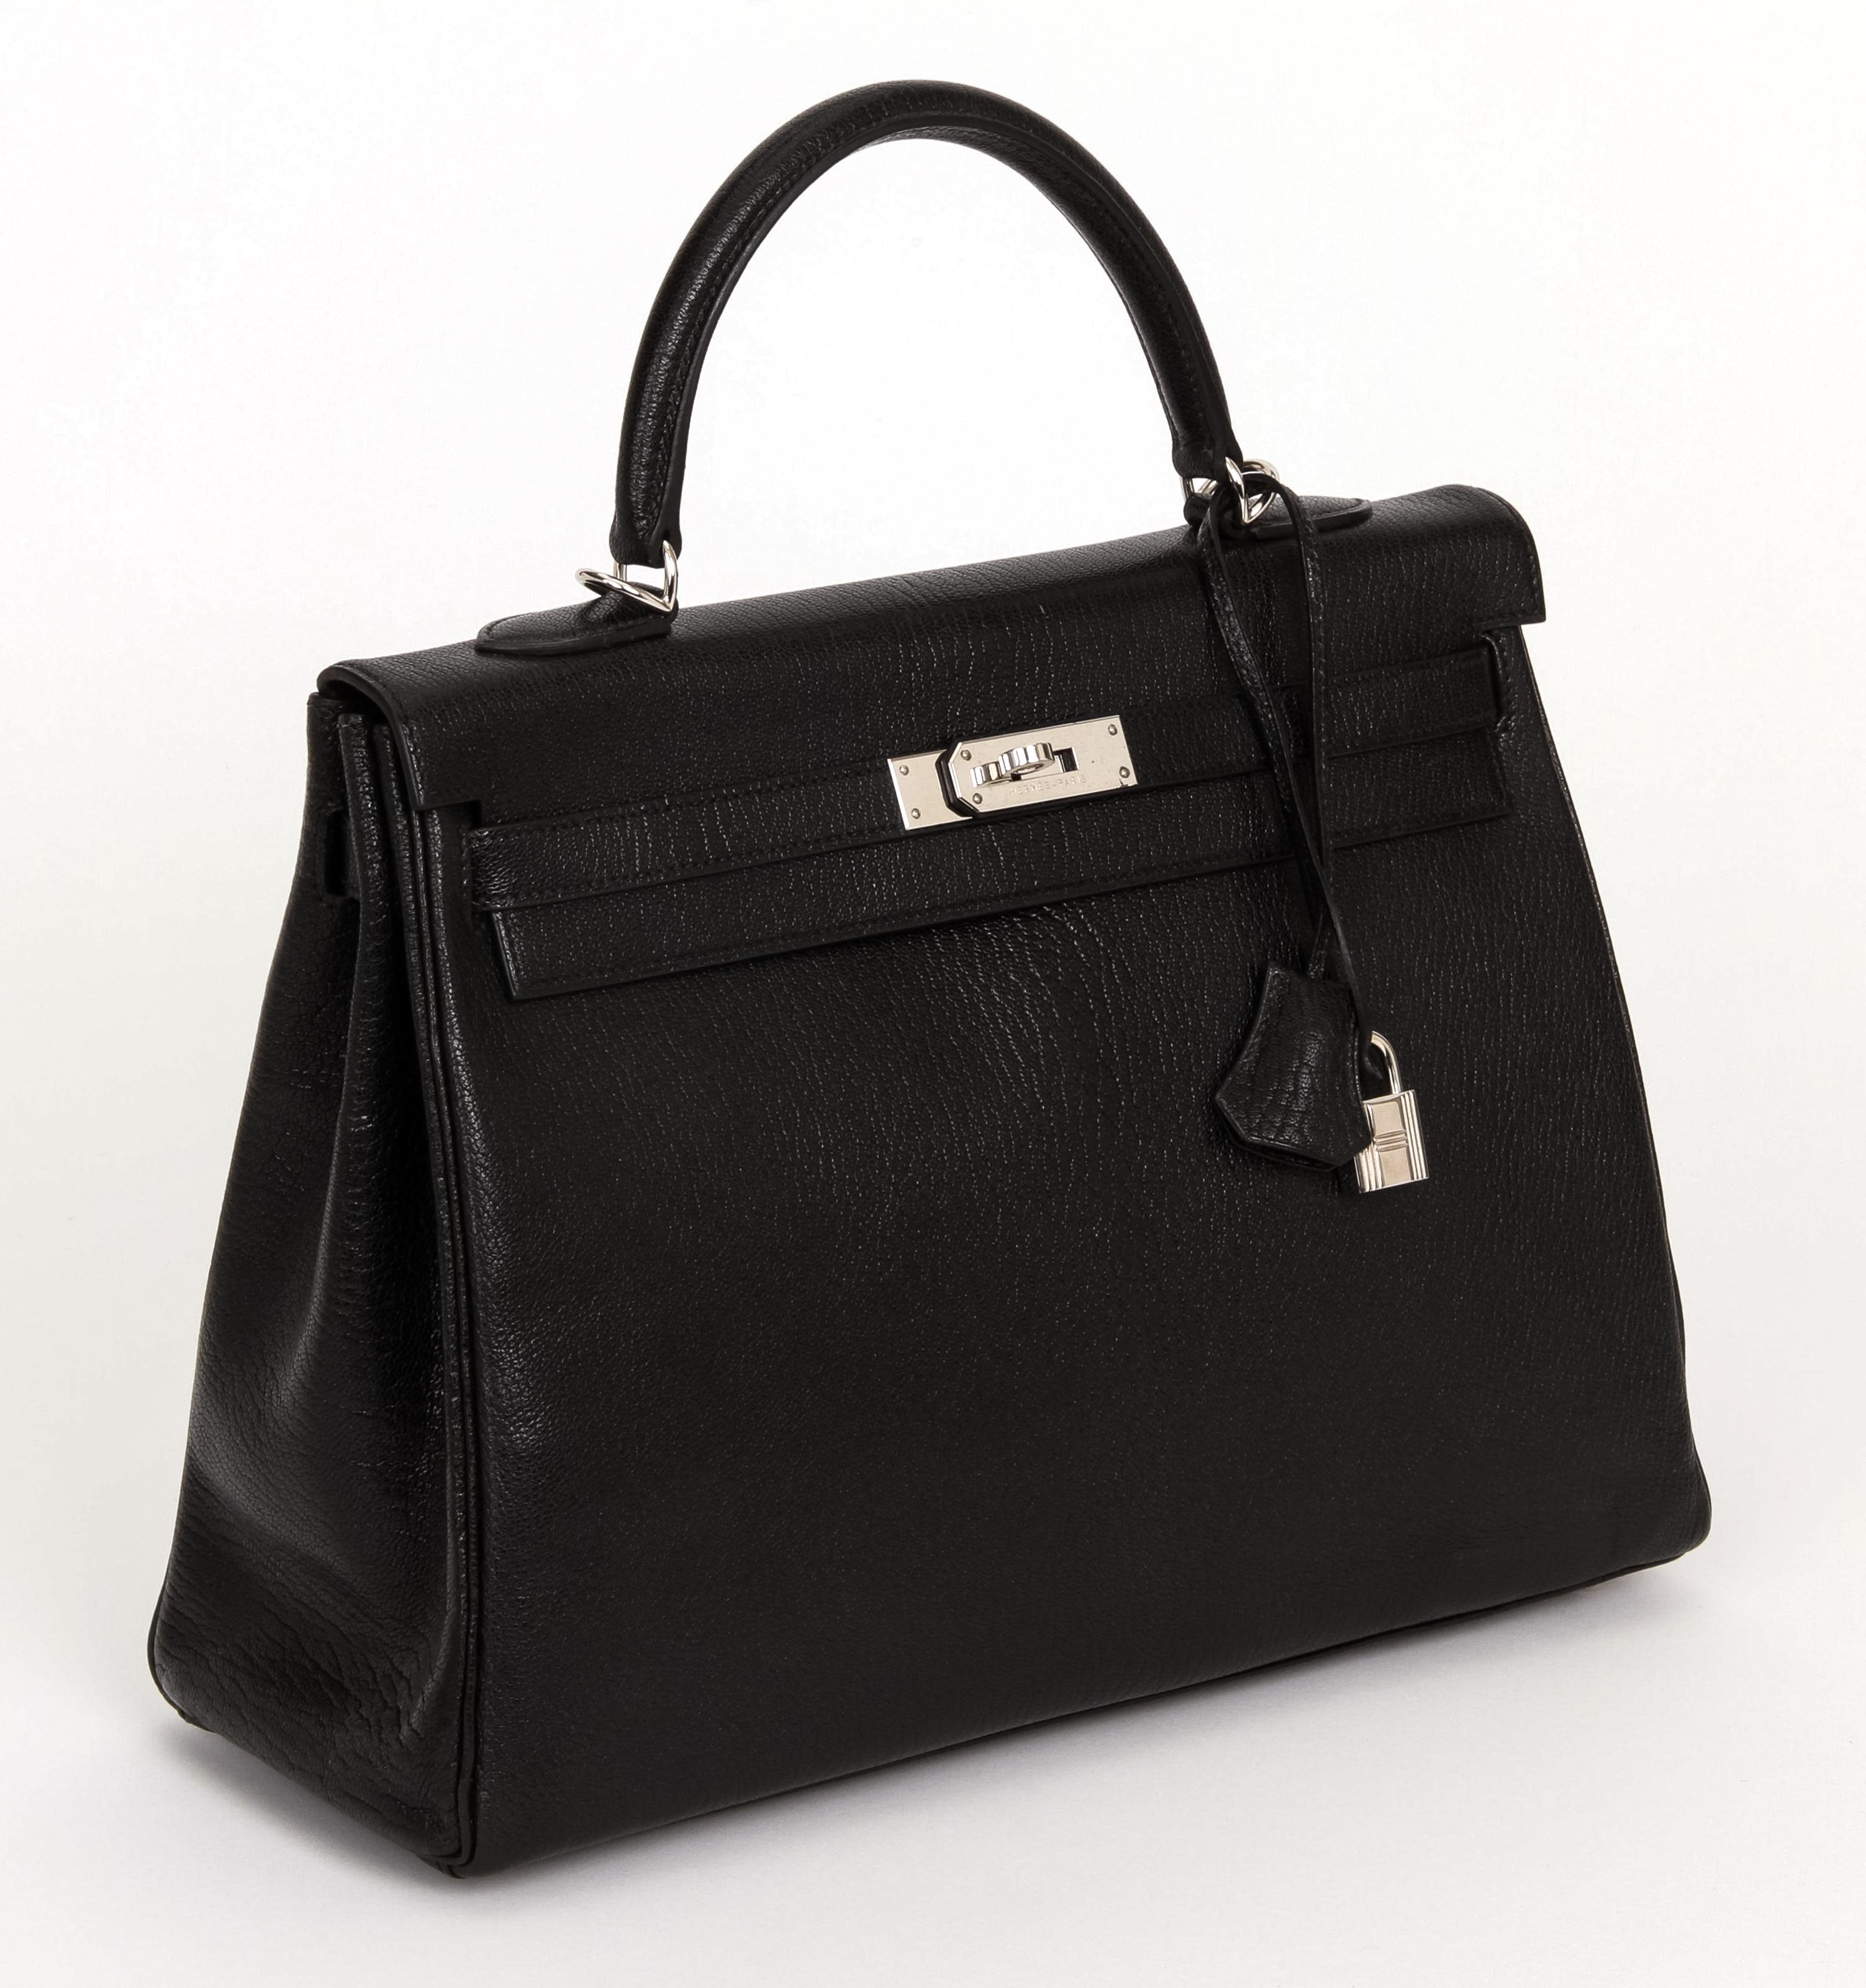 Hermès 35 cm black chevre mysore retourne Kelly bag with palladium hardware. Date stamp M in a square, 2009. Comes with: clochette, tirette, lock, 2 keys, detachable strap, original dust cover.